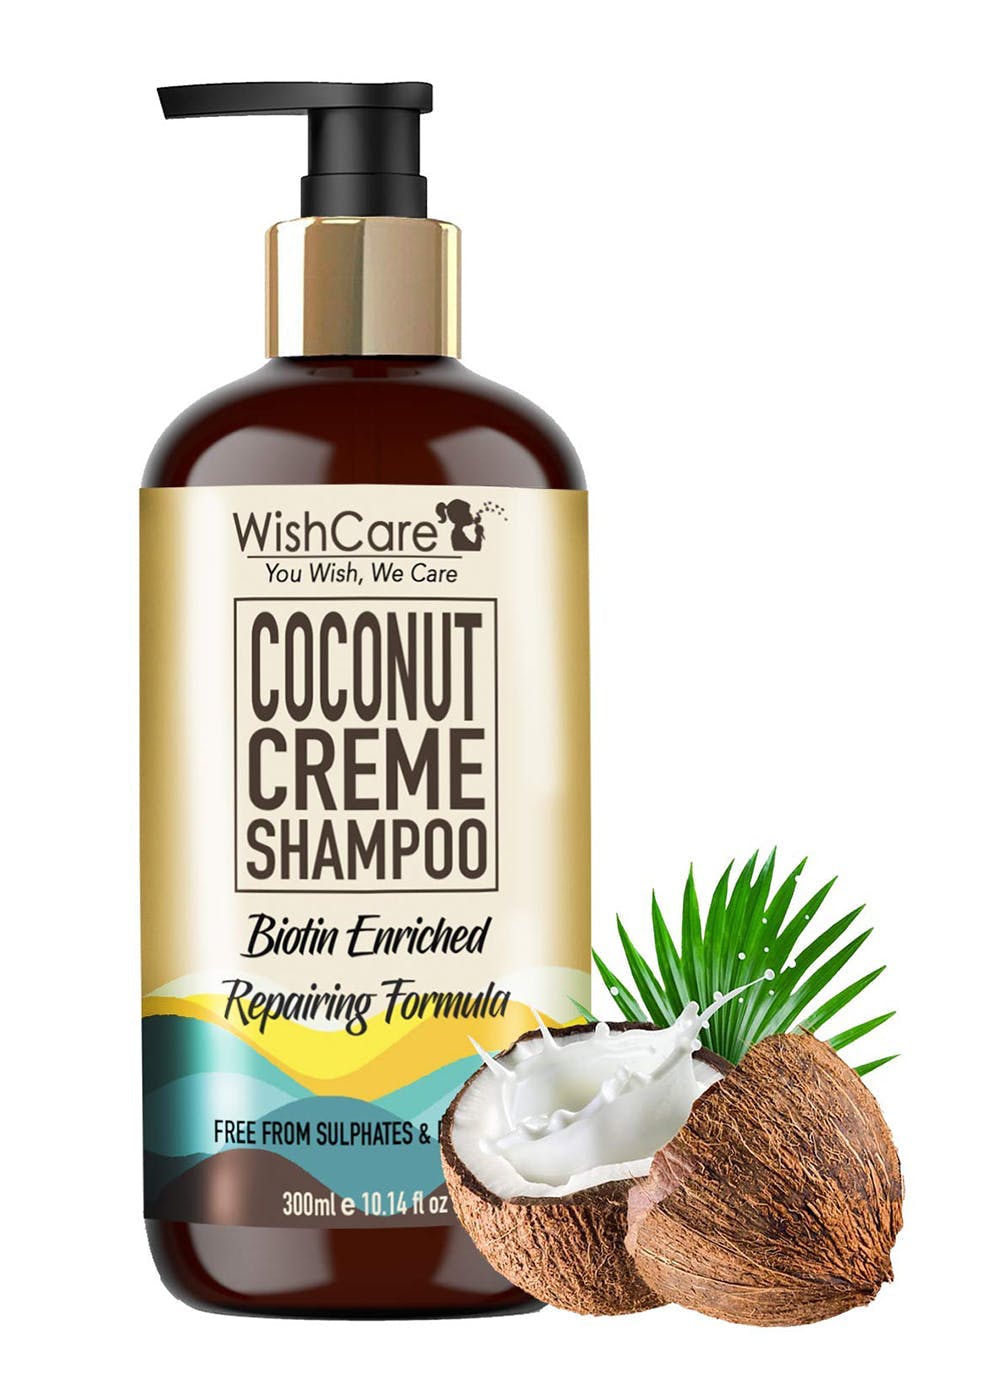 Coconut Creme Shampoo